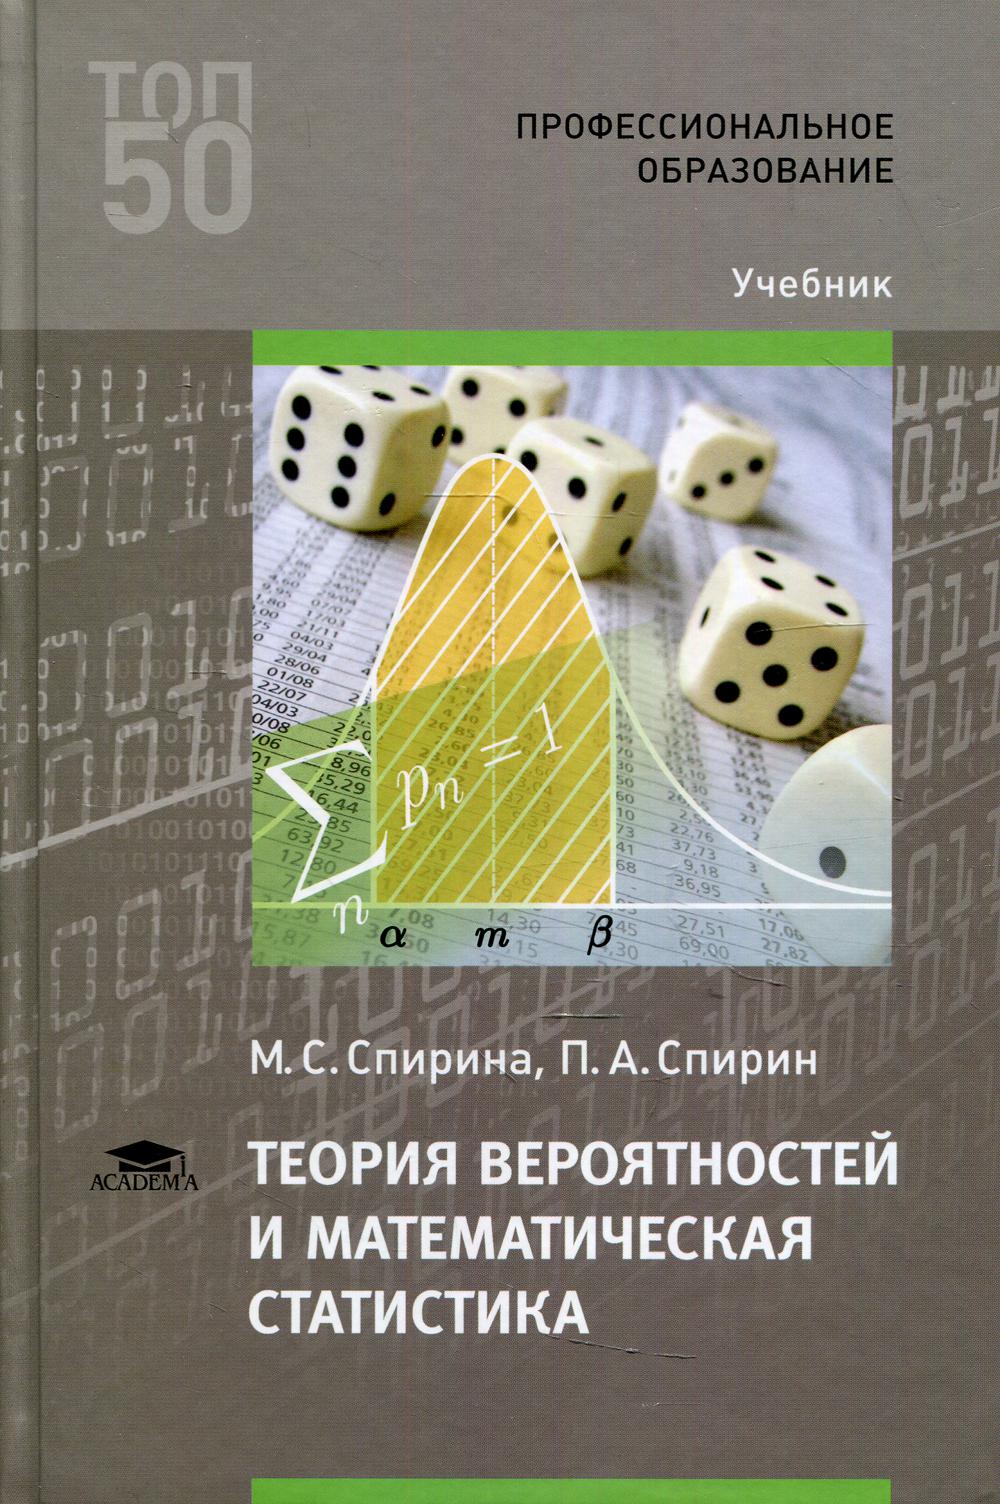 Теория вероятности учебник 7 9 2 часть. Теория вероятности учебник. Математическая статистика книги. Теория вероятностей и математическая статистика учебник. Теория вероятностей и математическая статистика книга.